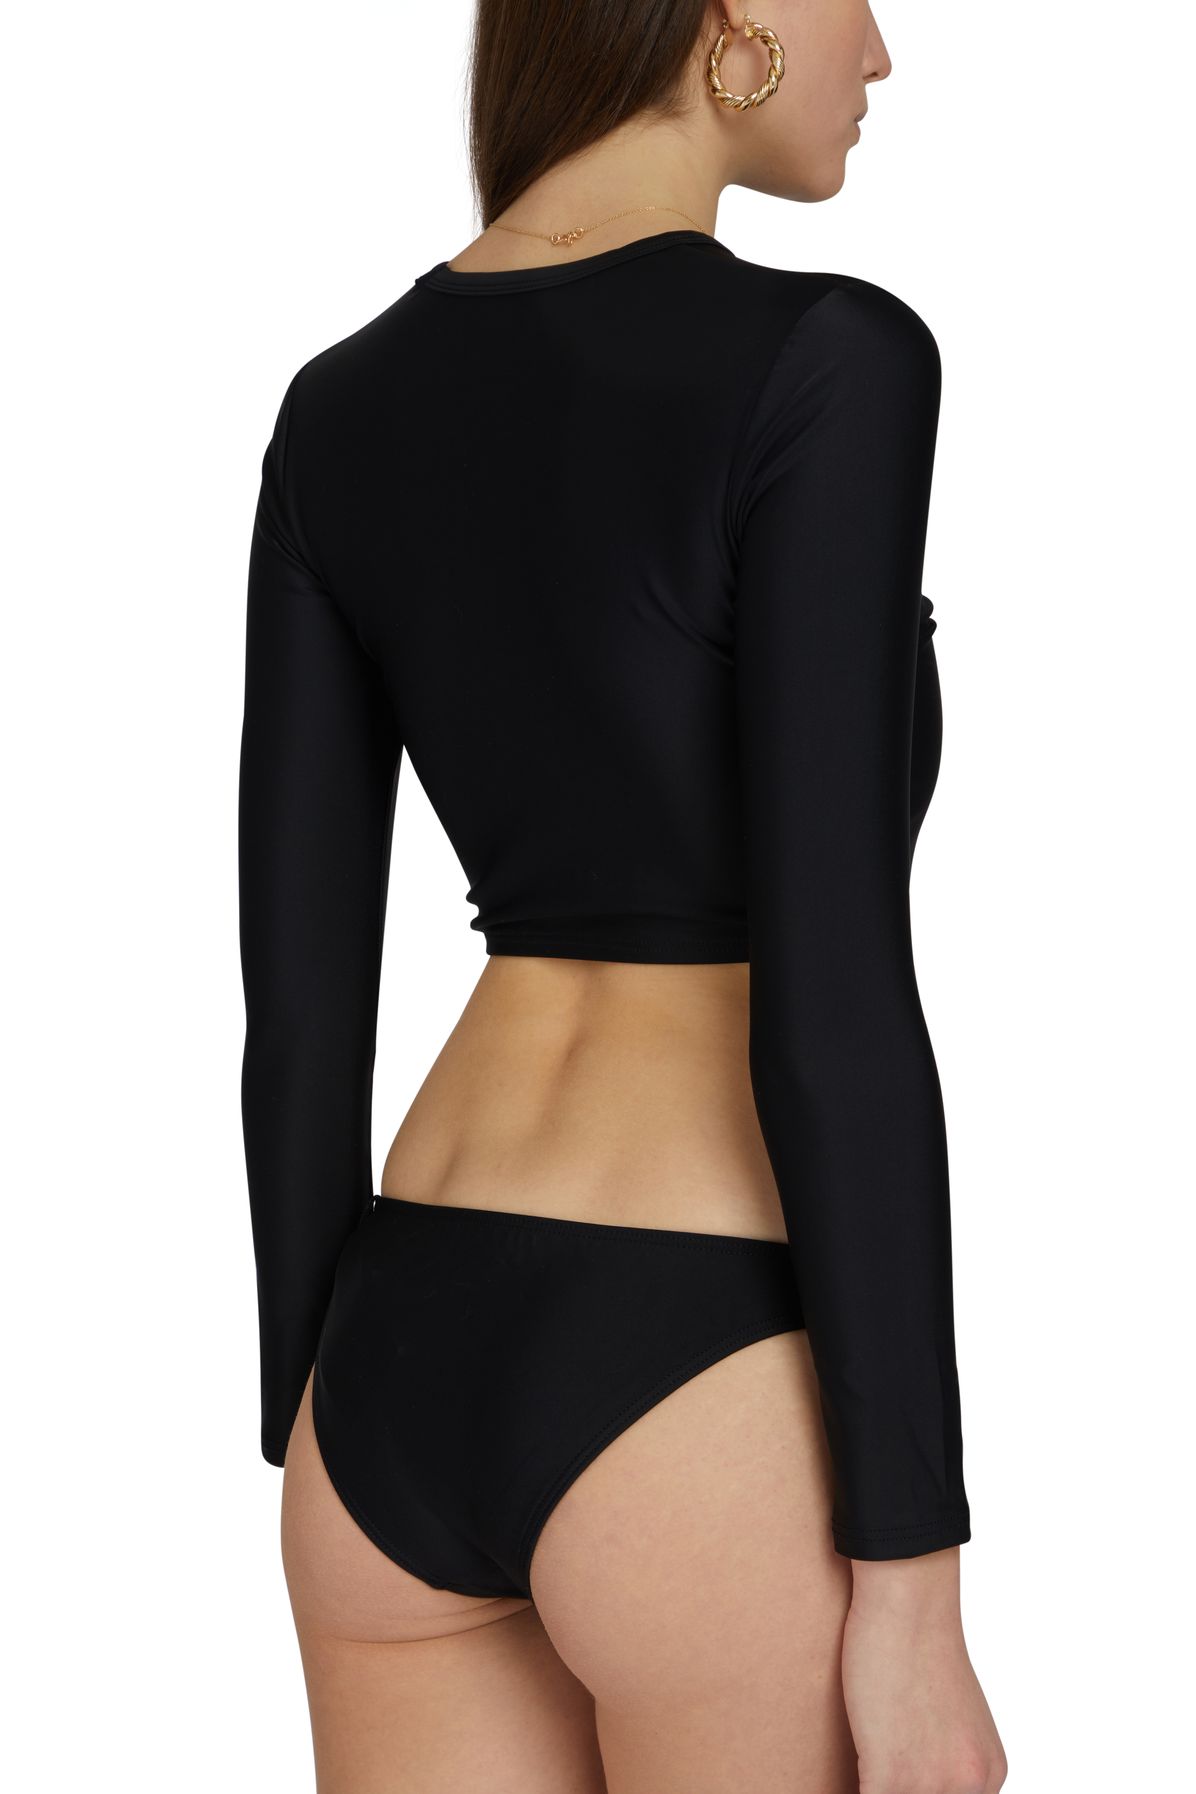 Matteau Bikini top long sleeves